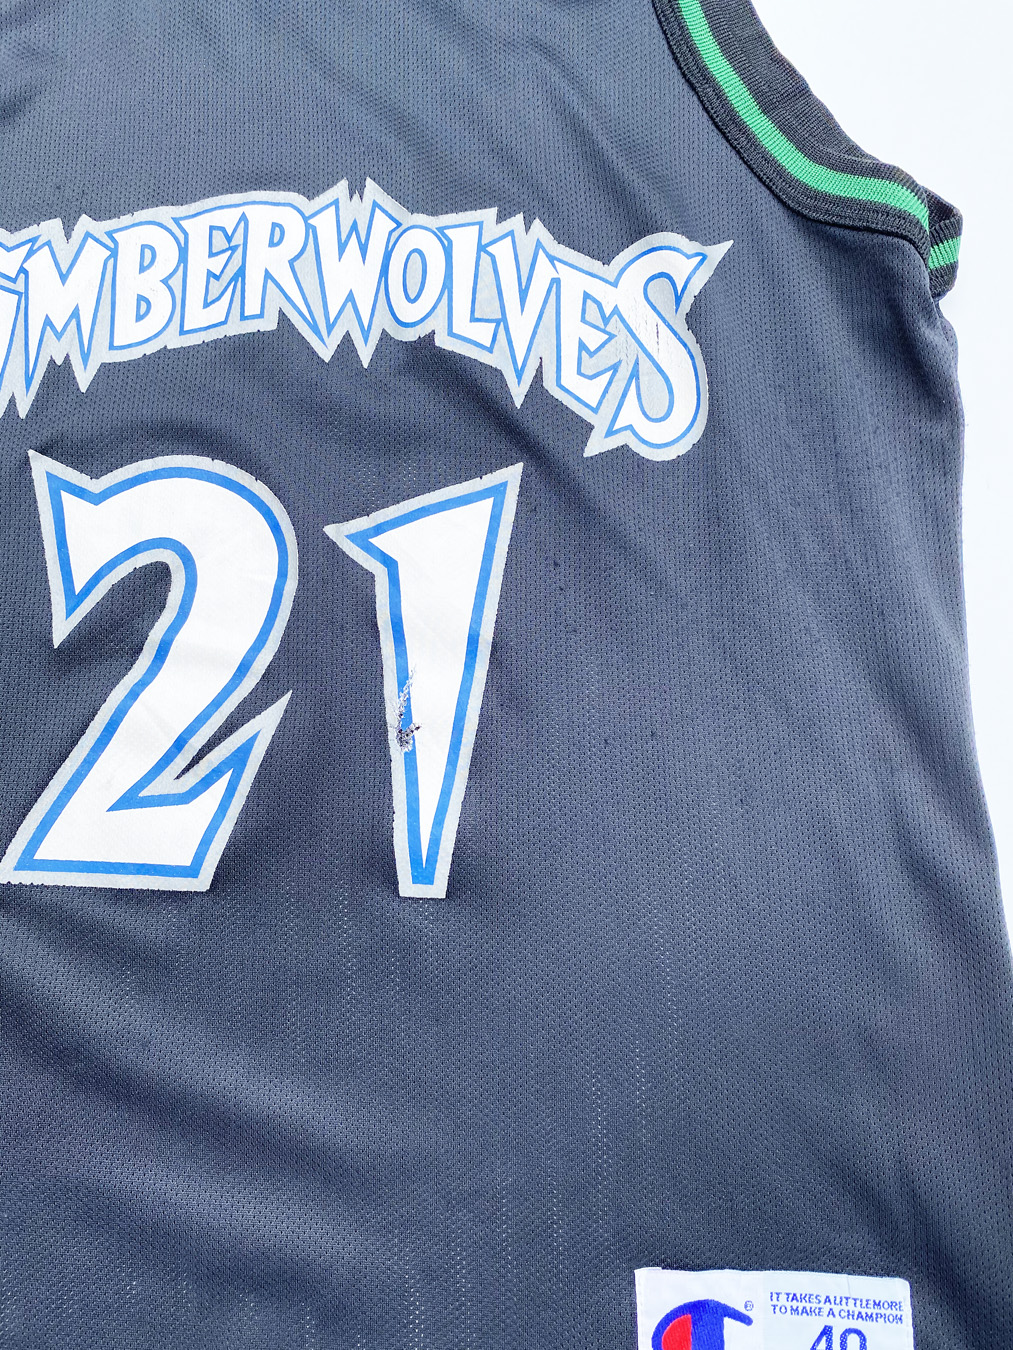 90s timberwolves jersey